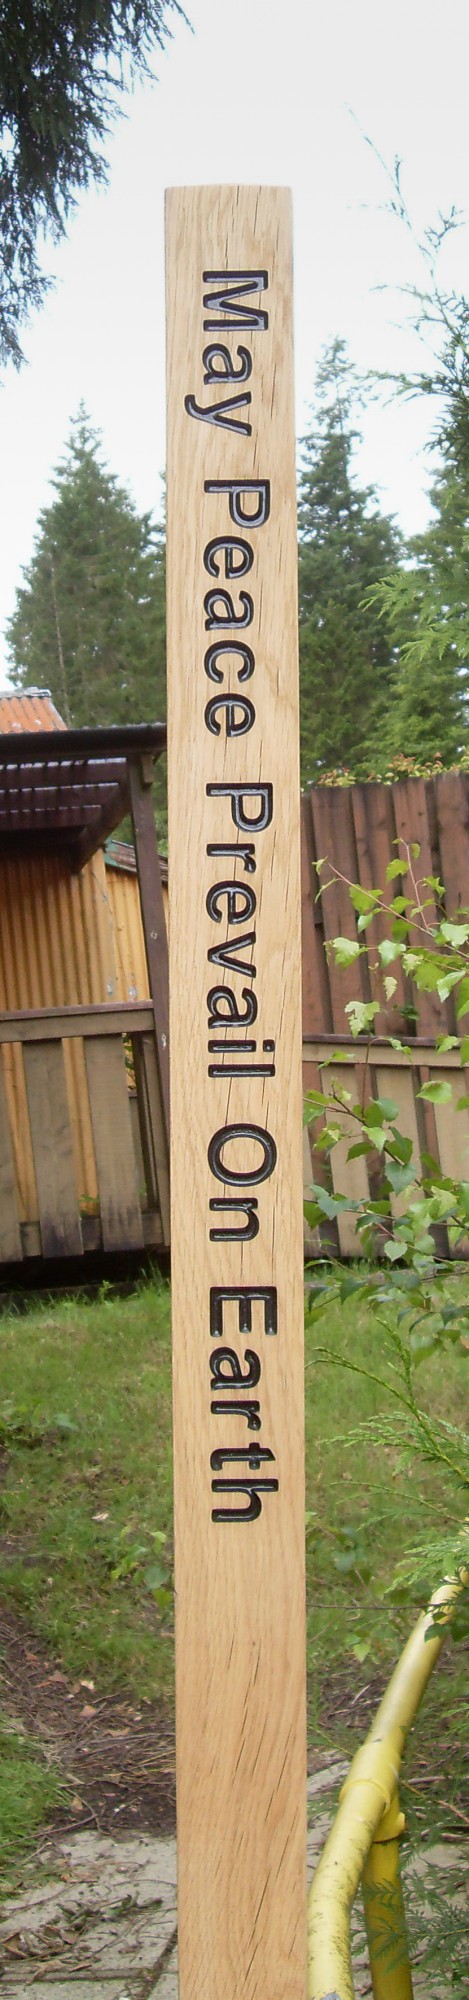 wooden peace pole